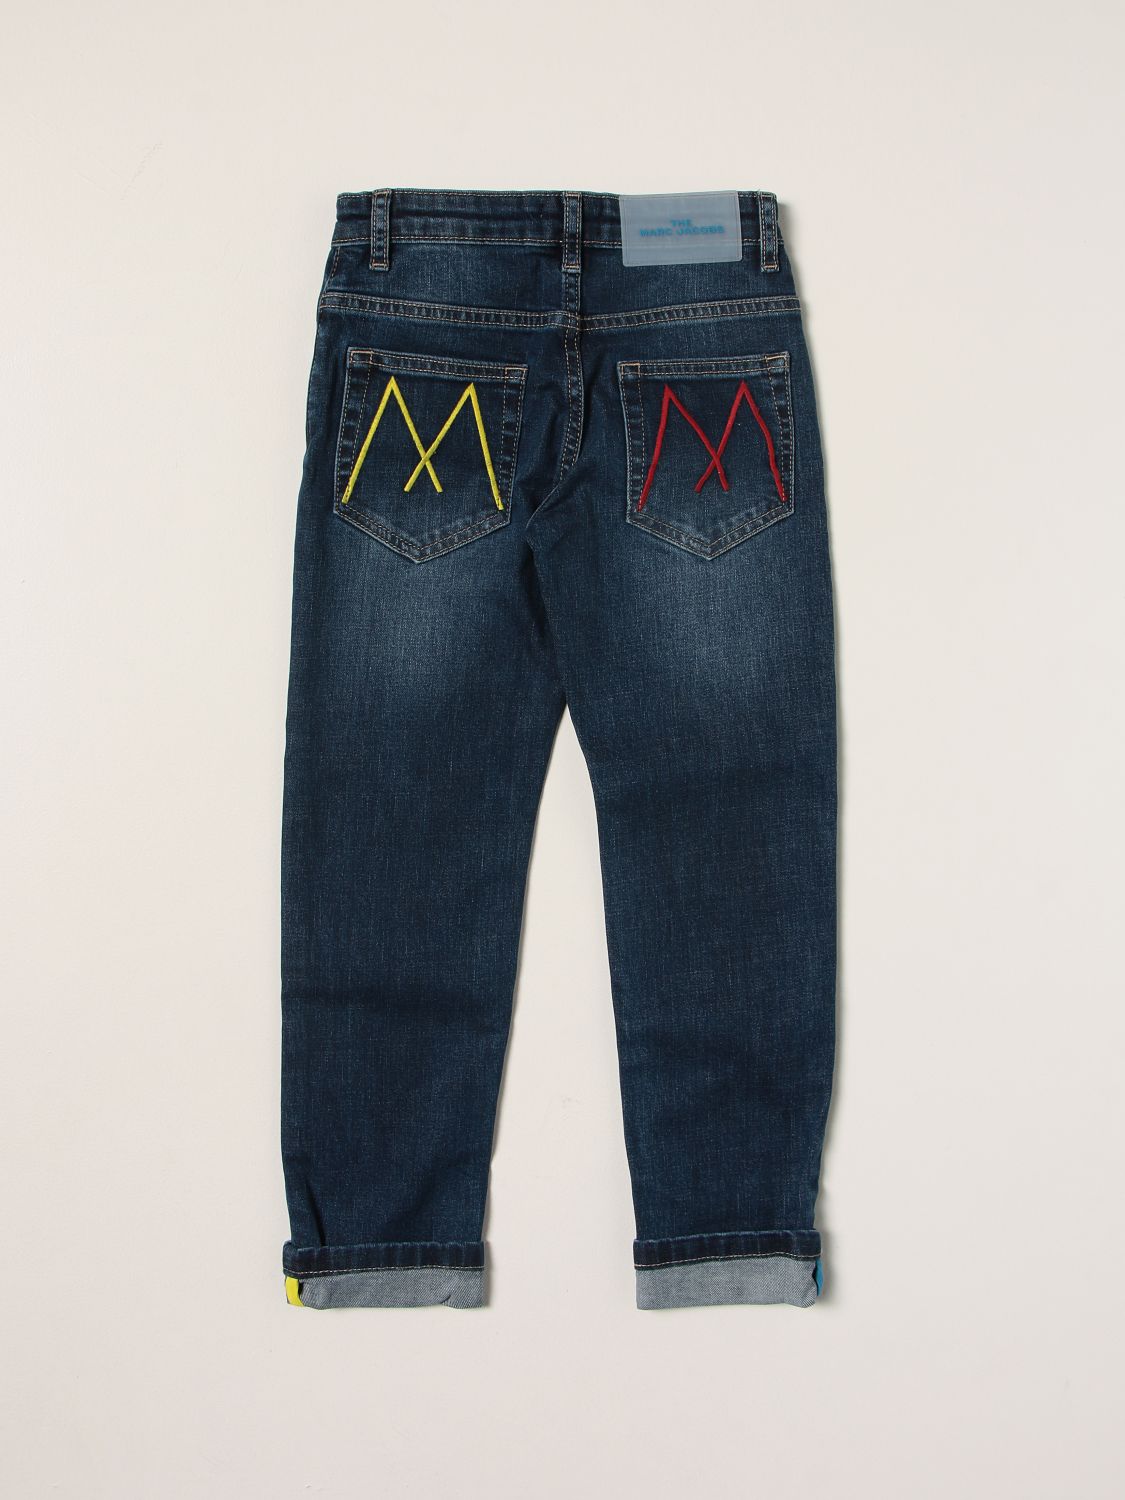 Klas ik heb dorst ik ontbijt LITTLE MARC JACOBS: jeans with logo - Denim | Little Marc Jacobs jeans  W24245 online on GIGLIO.COM